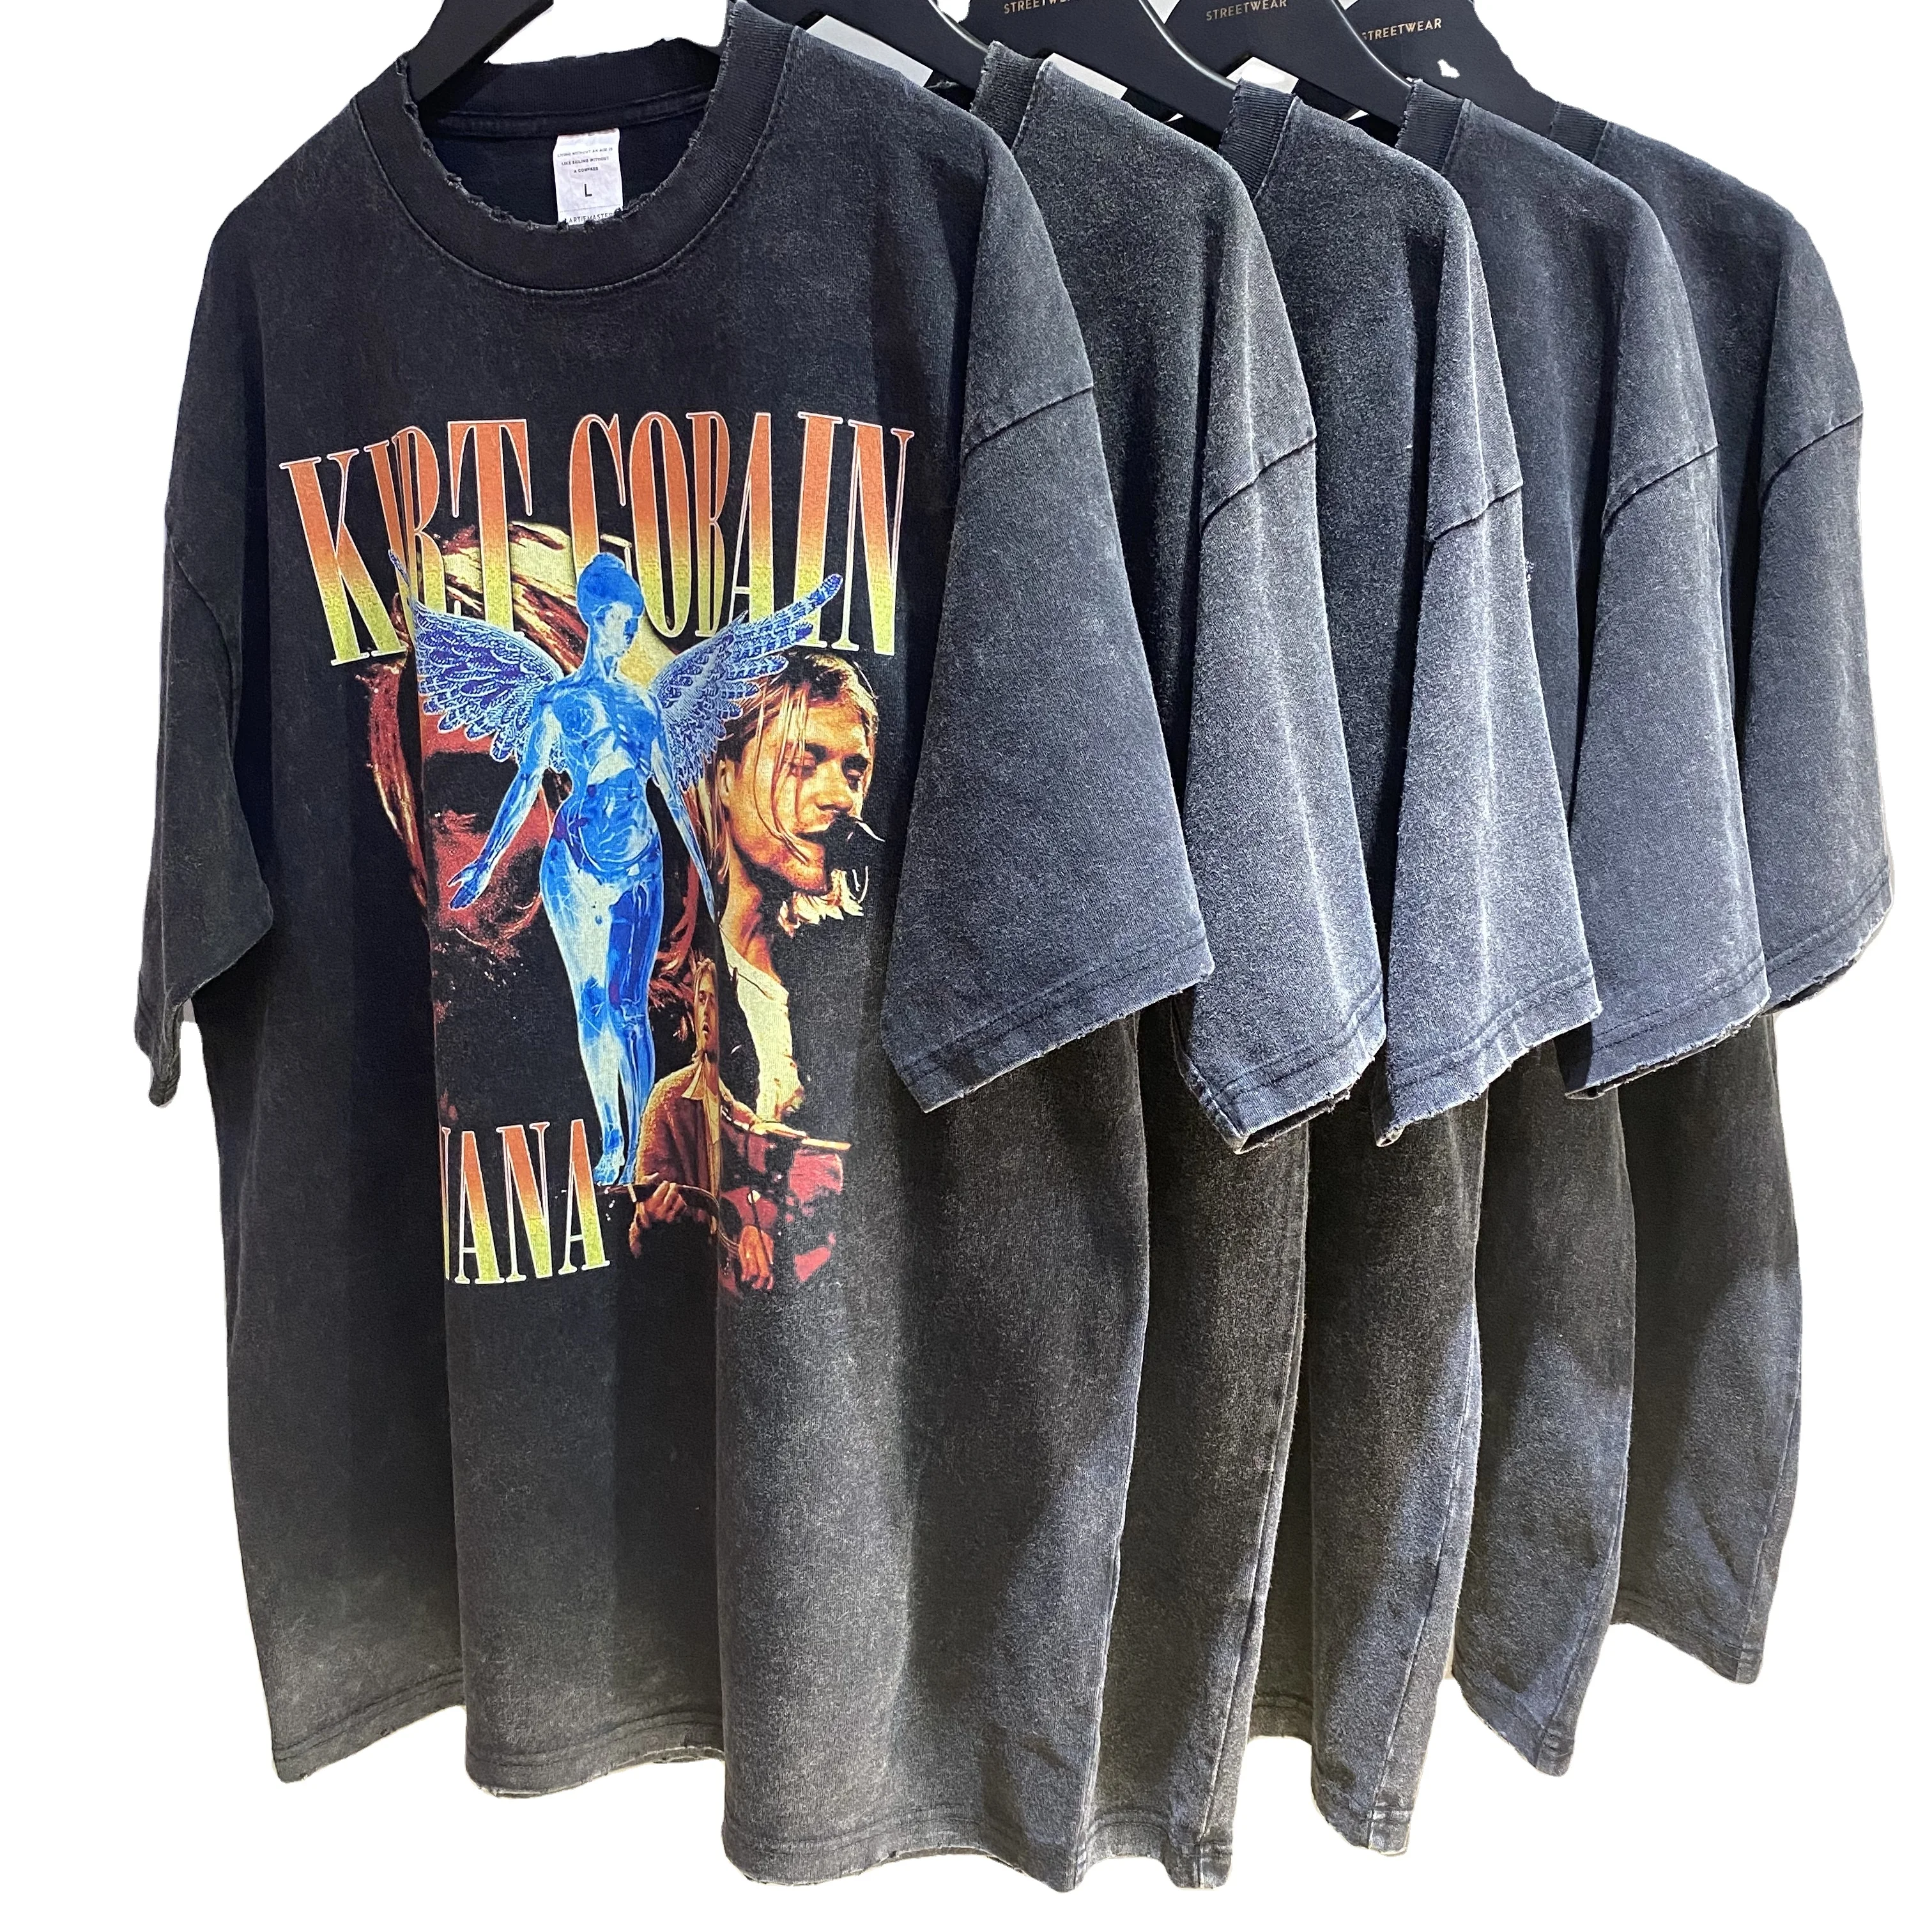 Wholesale Custom graphic tees rock t shirts mens digital printing wash tshirts From m.alibaba.com